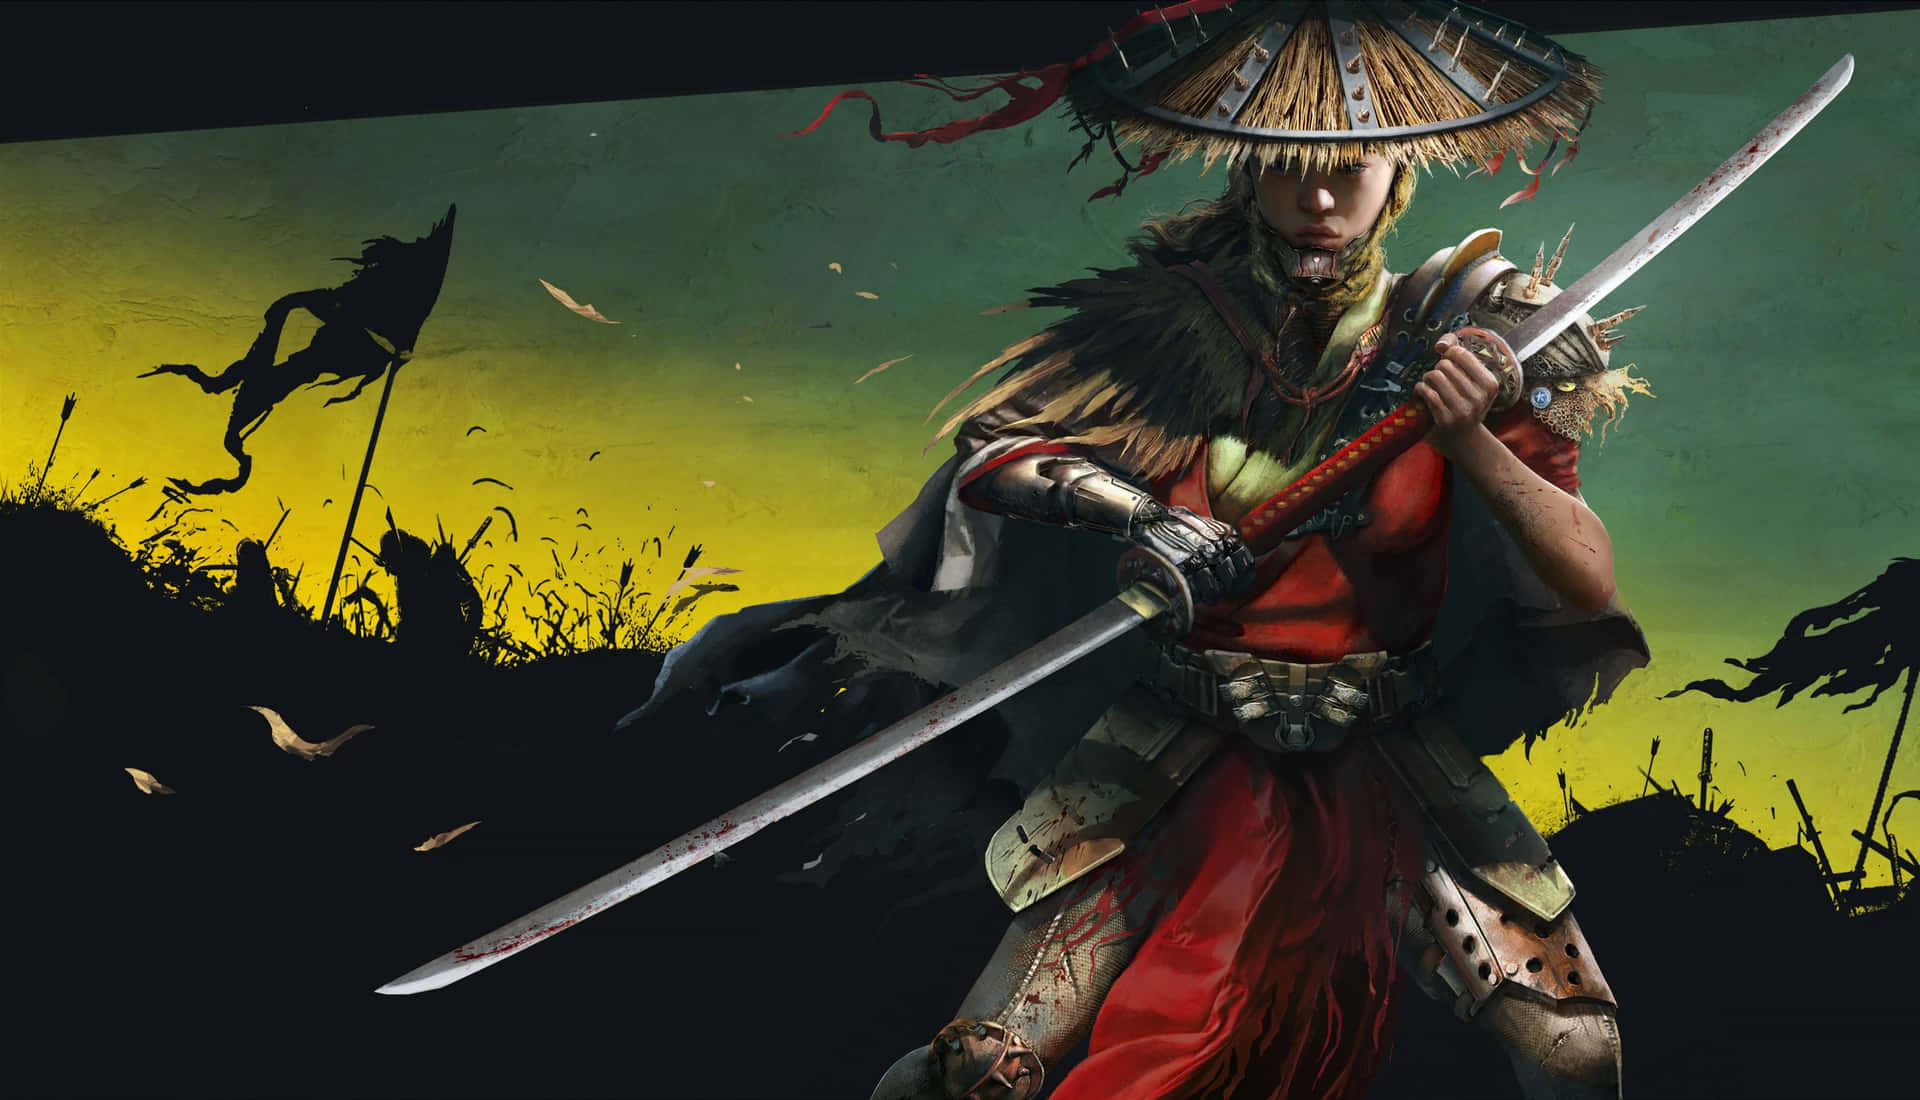 A Woman In A Samurai Costume Holding A Sword